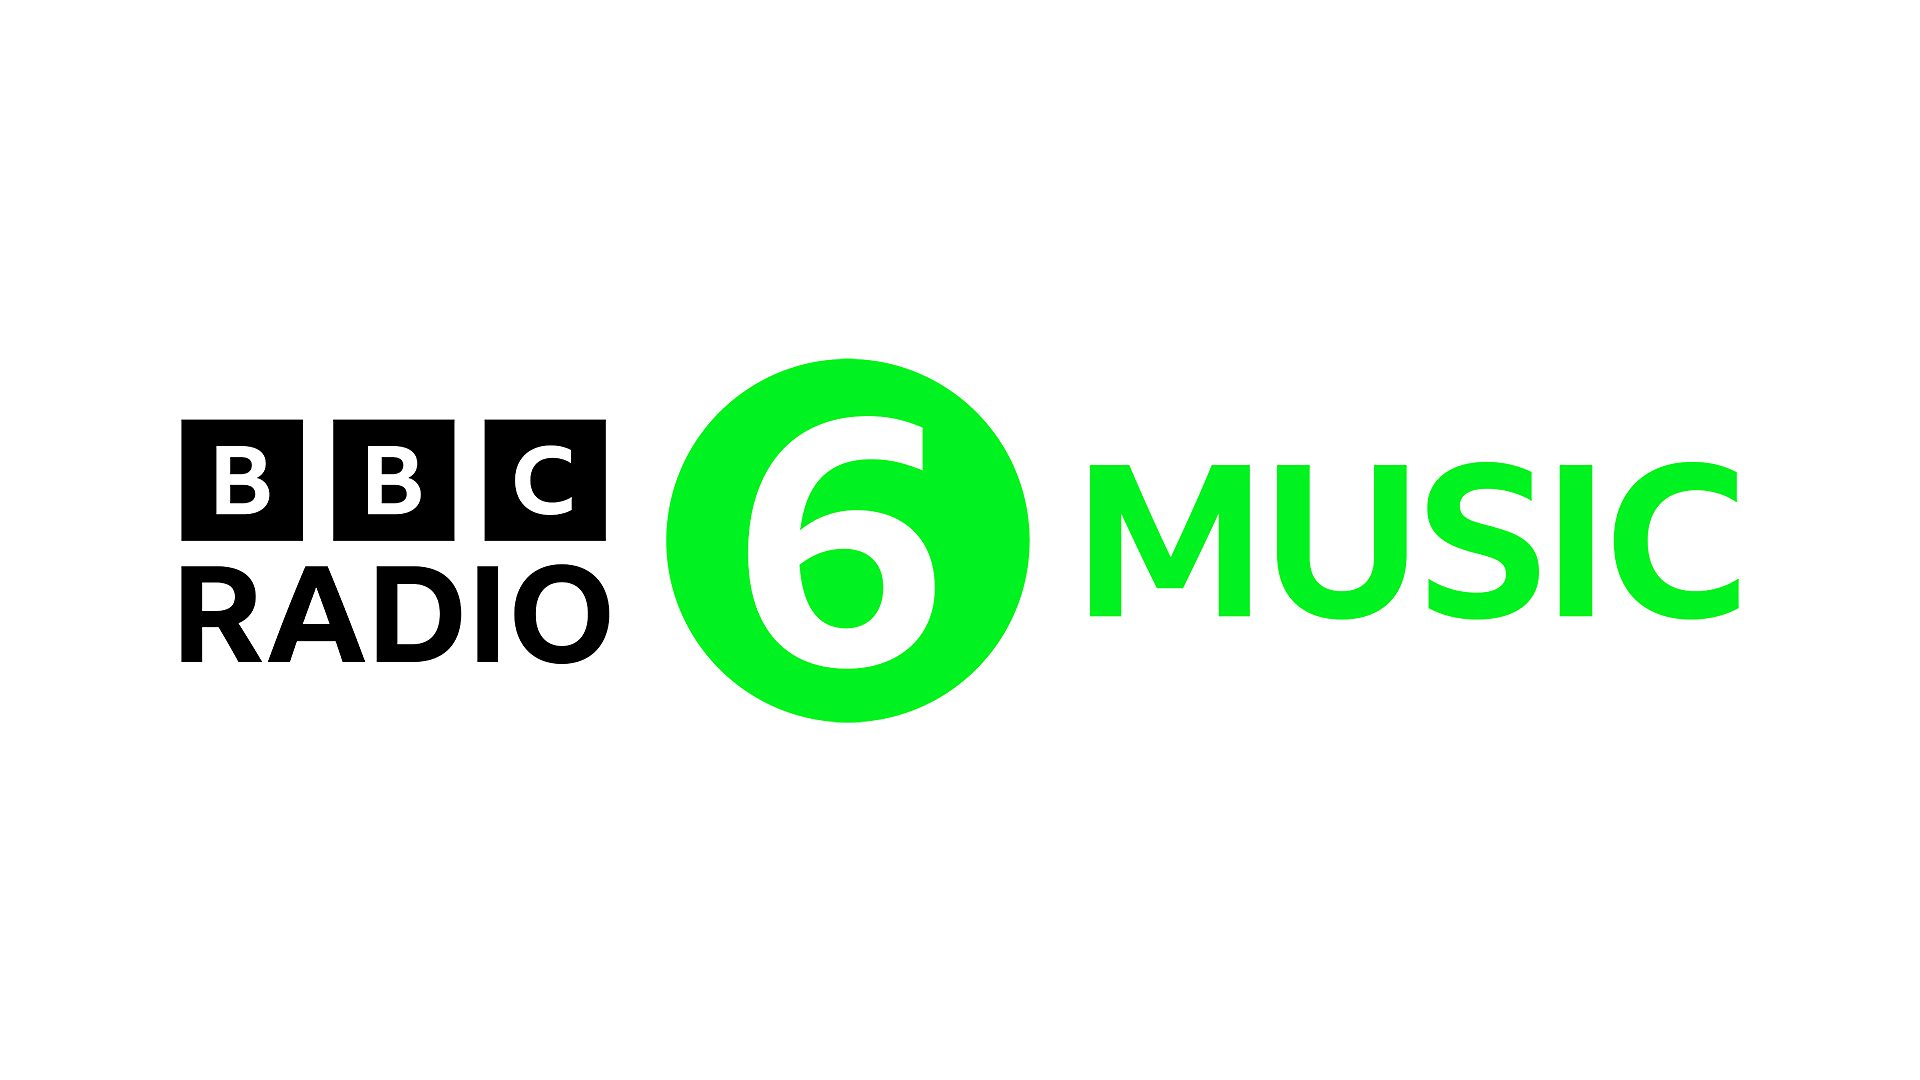 BBC - About Radio Music